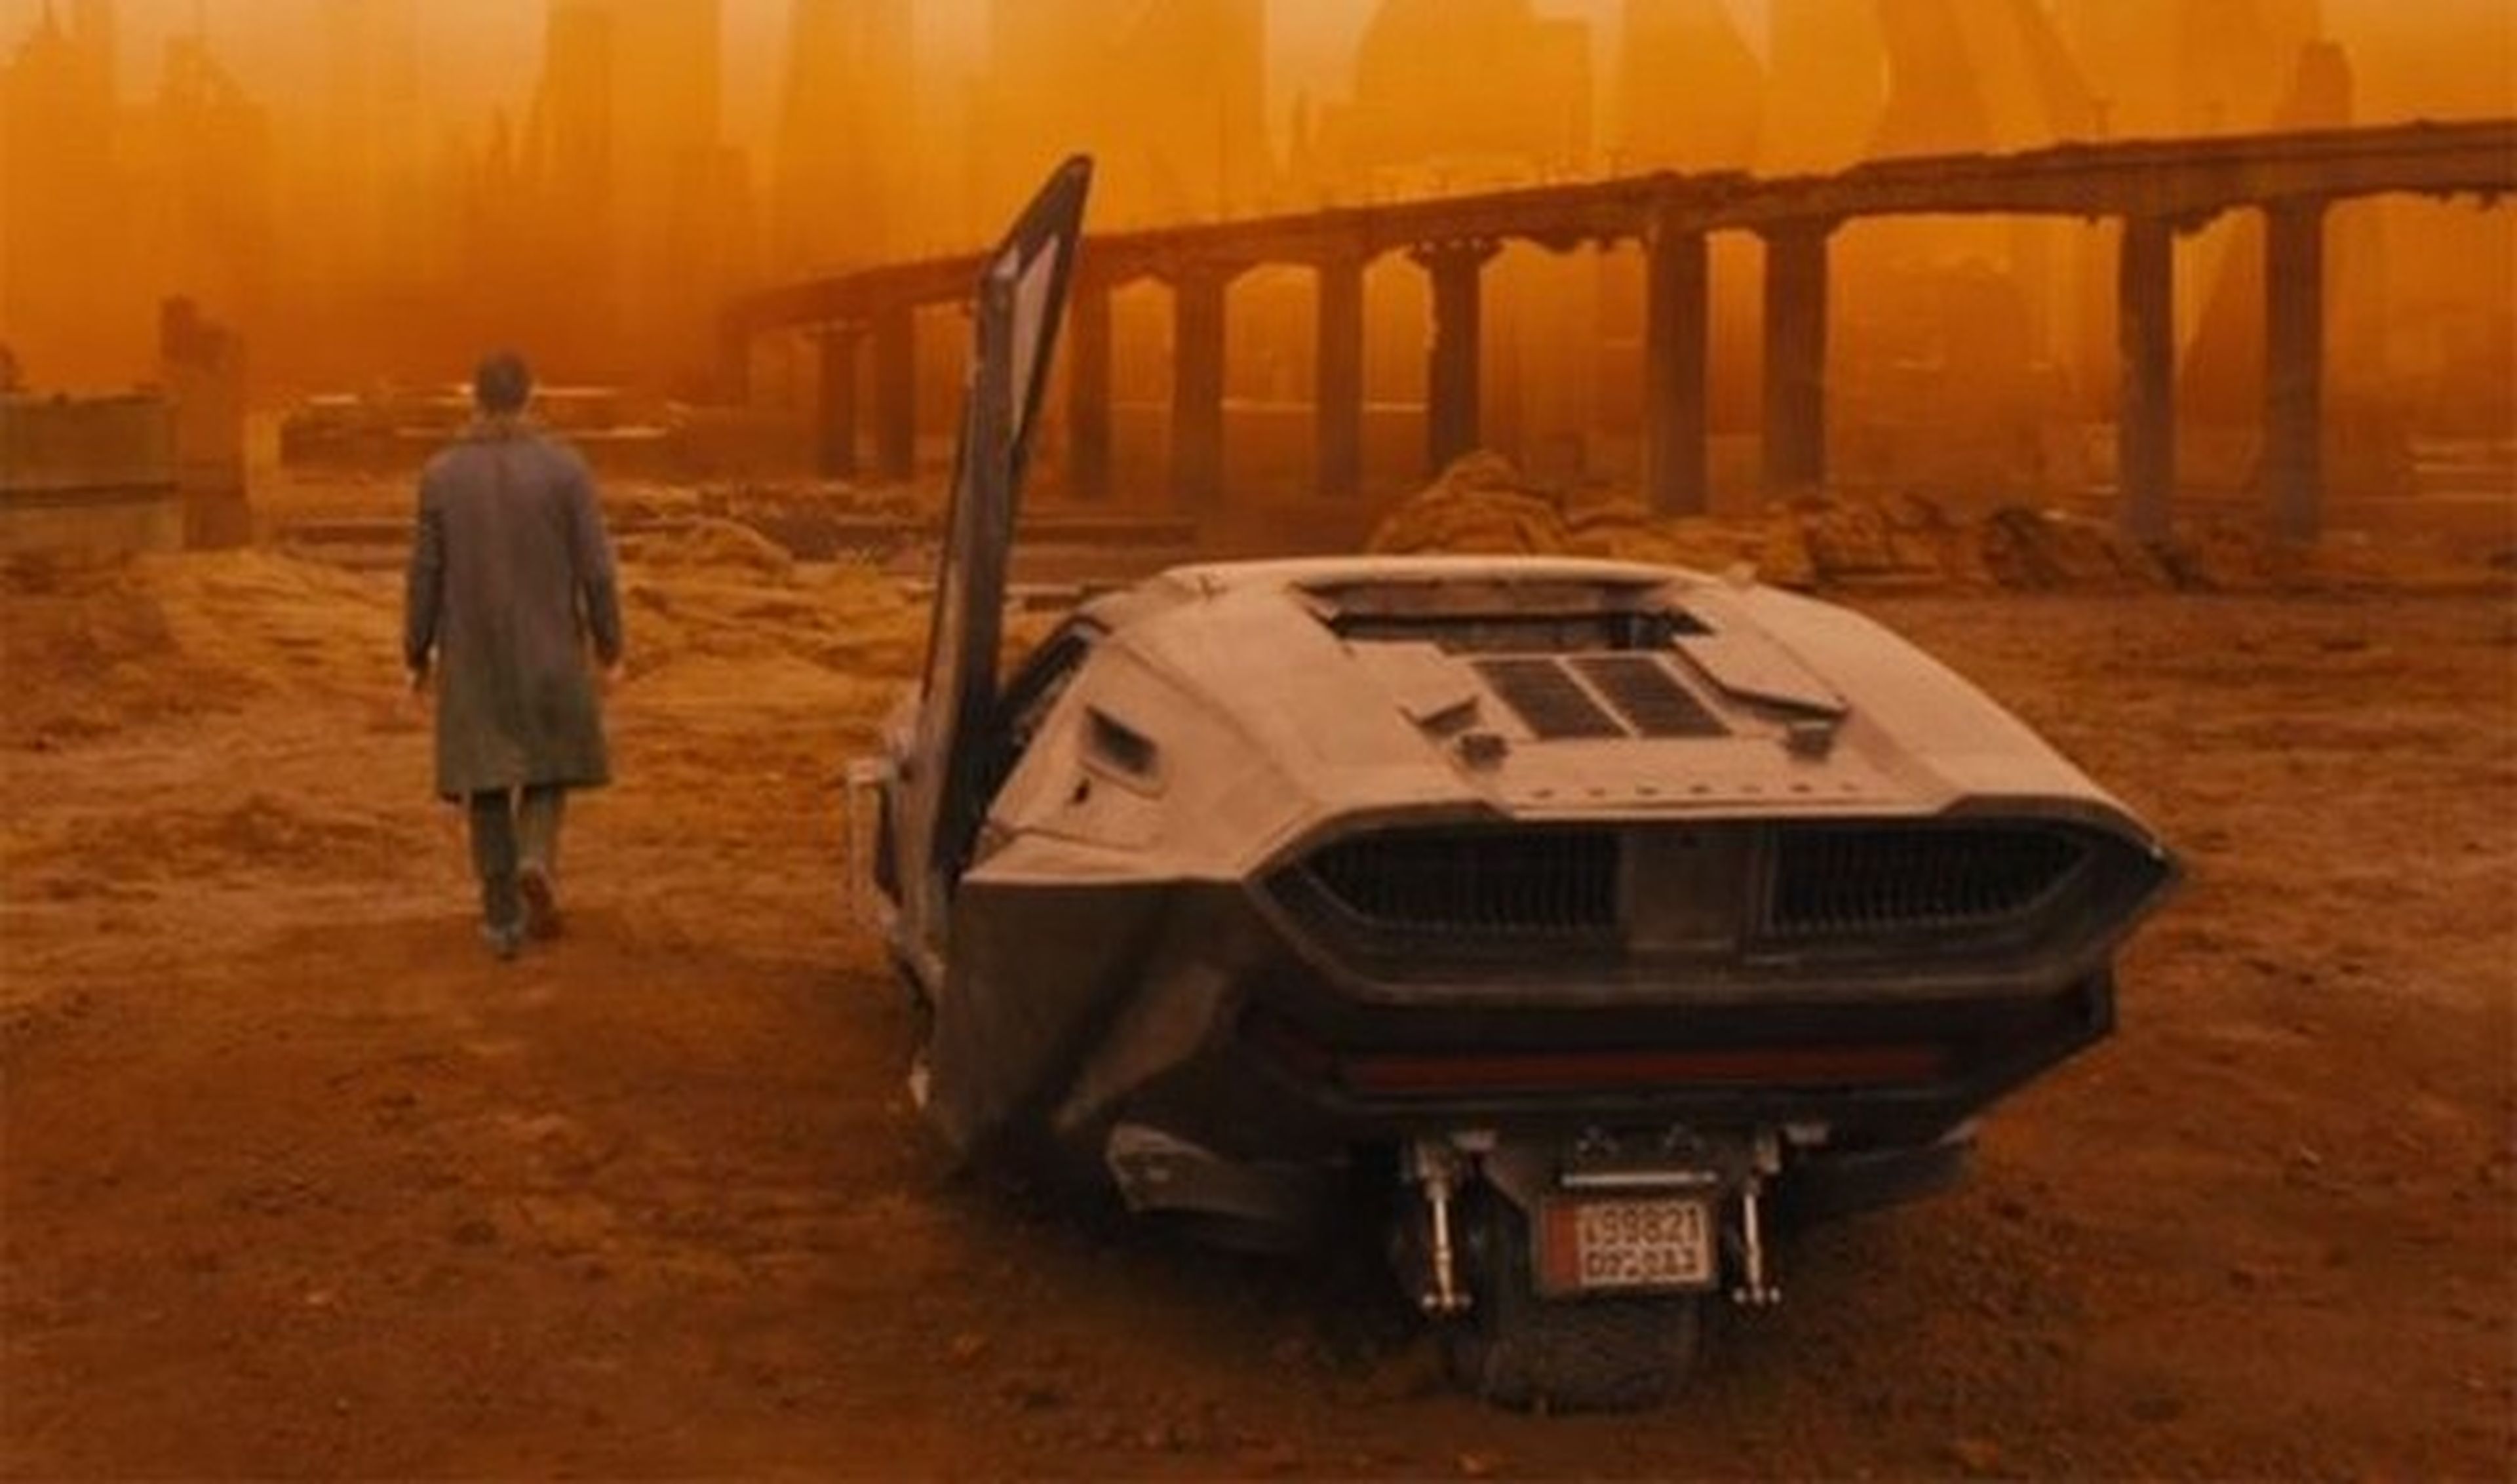 Impresiona: ojo con los “coches” de Blade Runner 2049